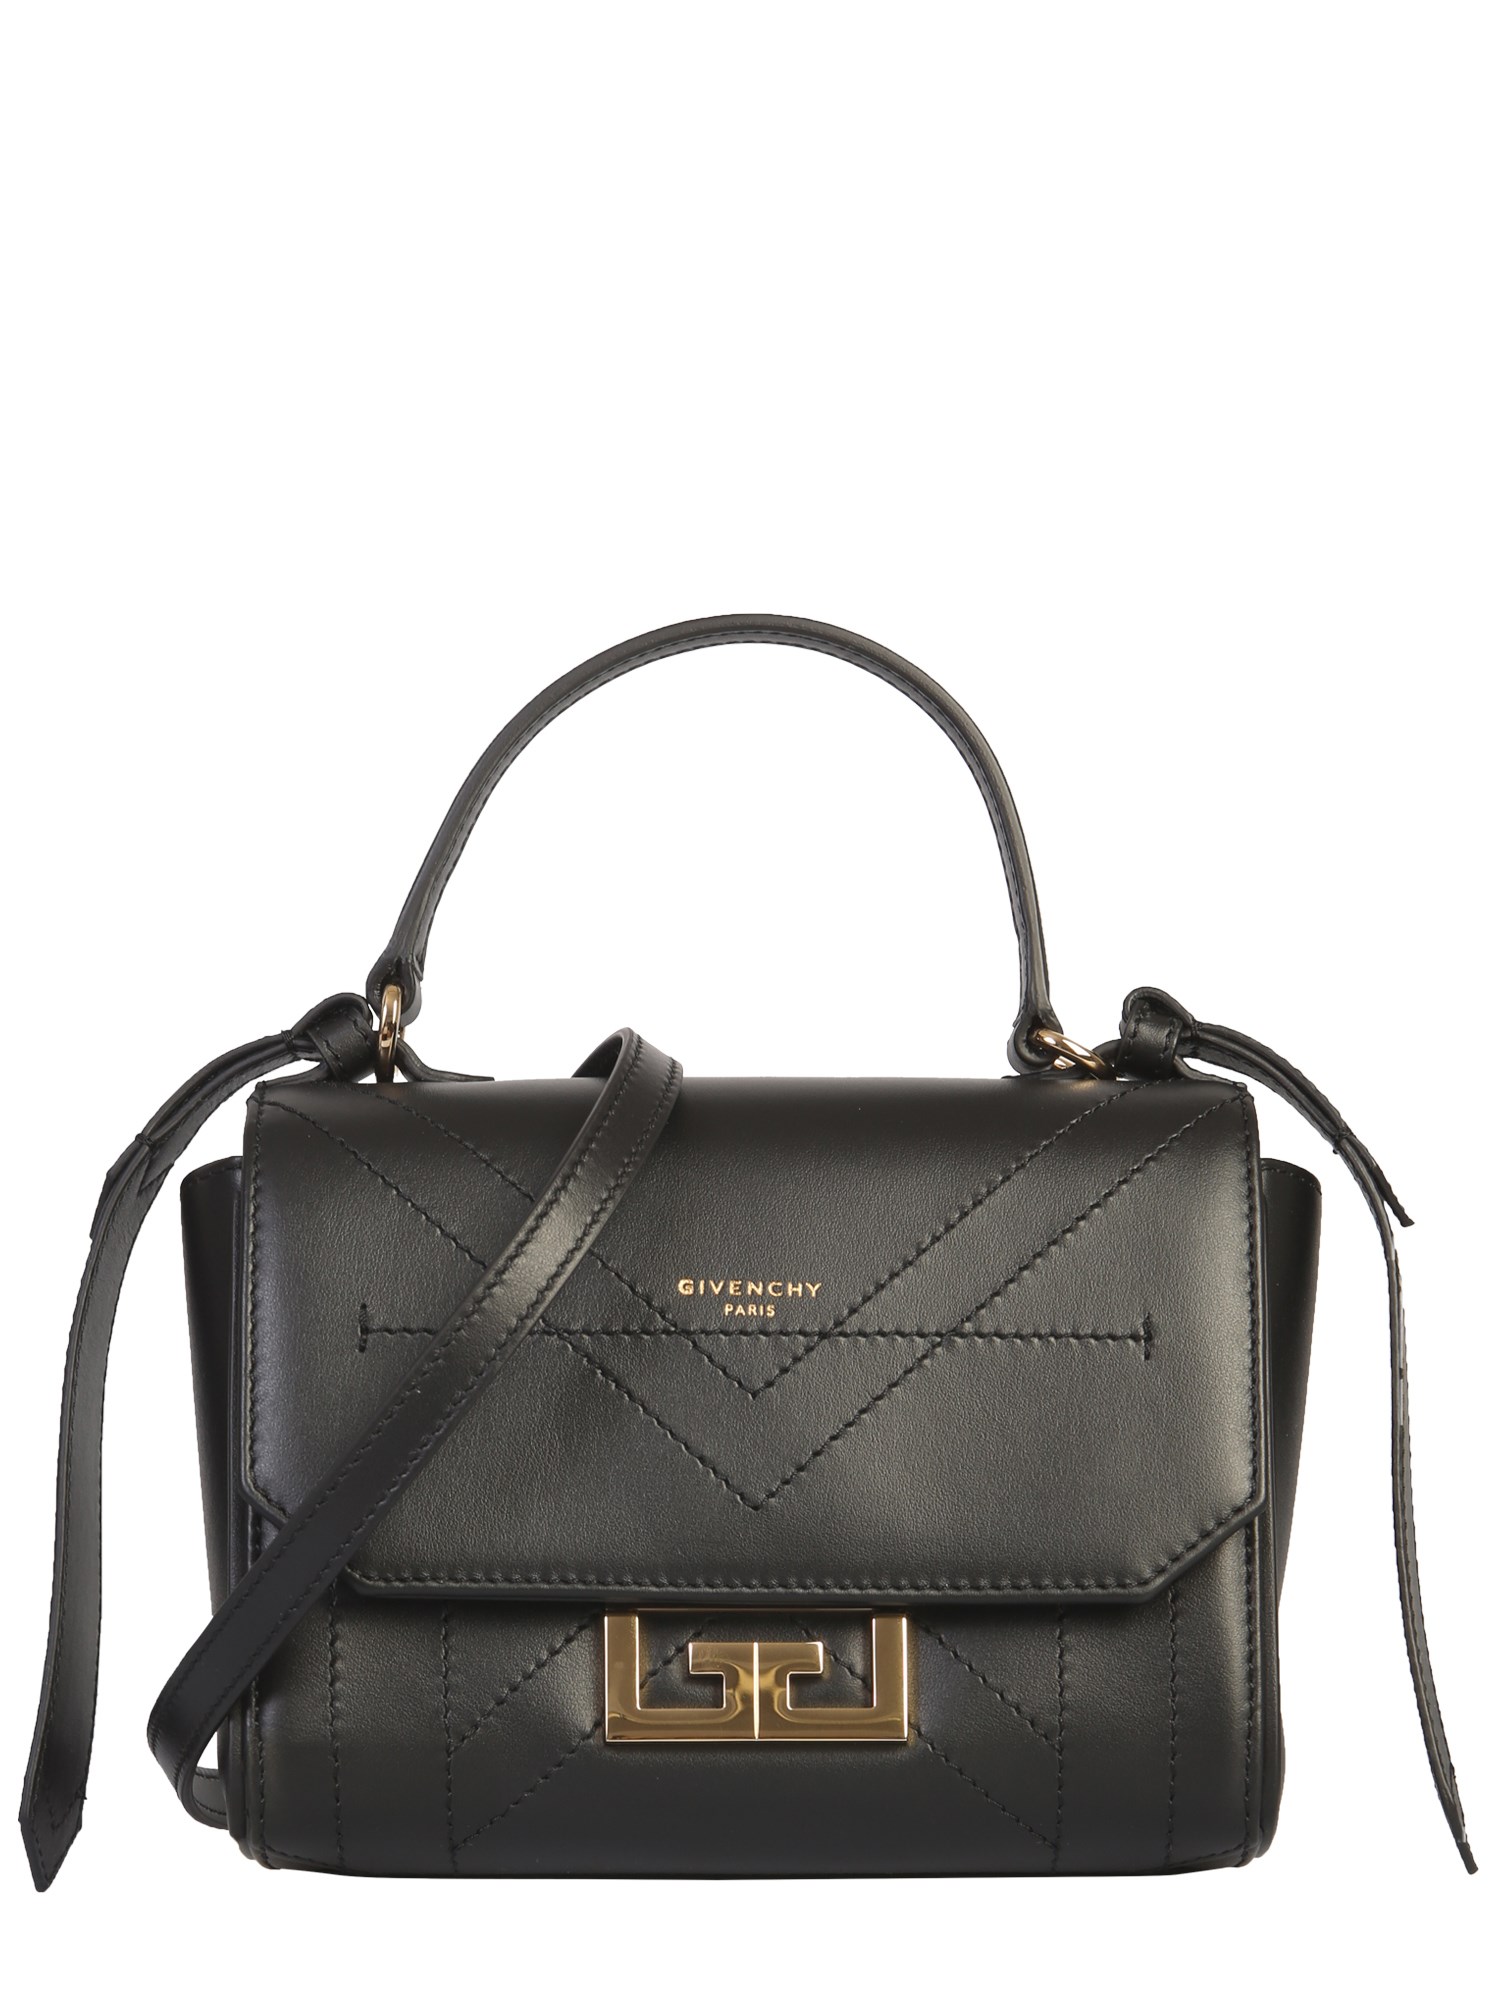 Givenchy Mini Eden Bag In Black | ModeSens